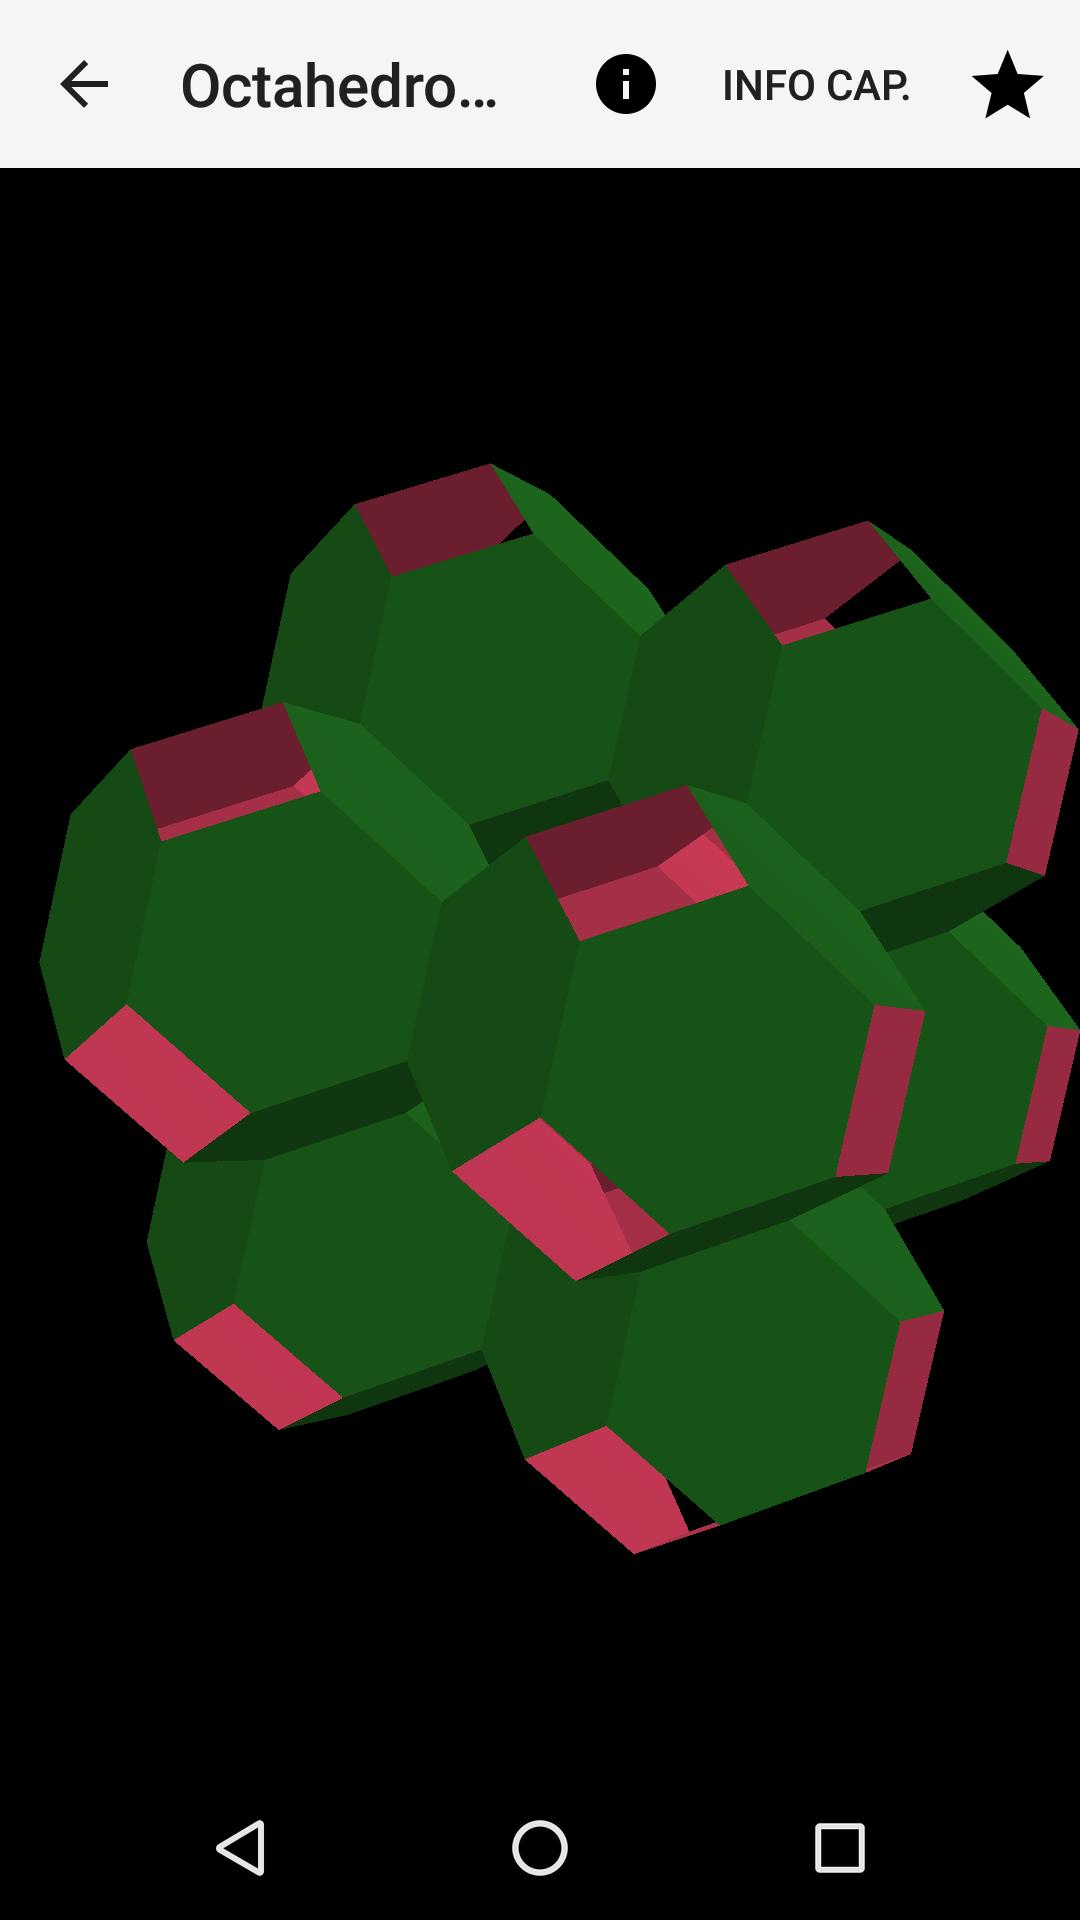 Polyhedra. Polyhedra zkbridge. Polyhedra characters. Polyhedra network